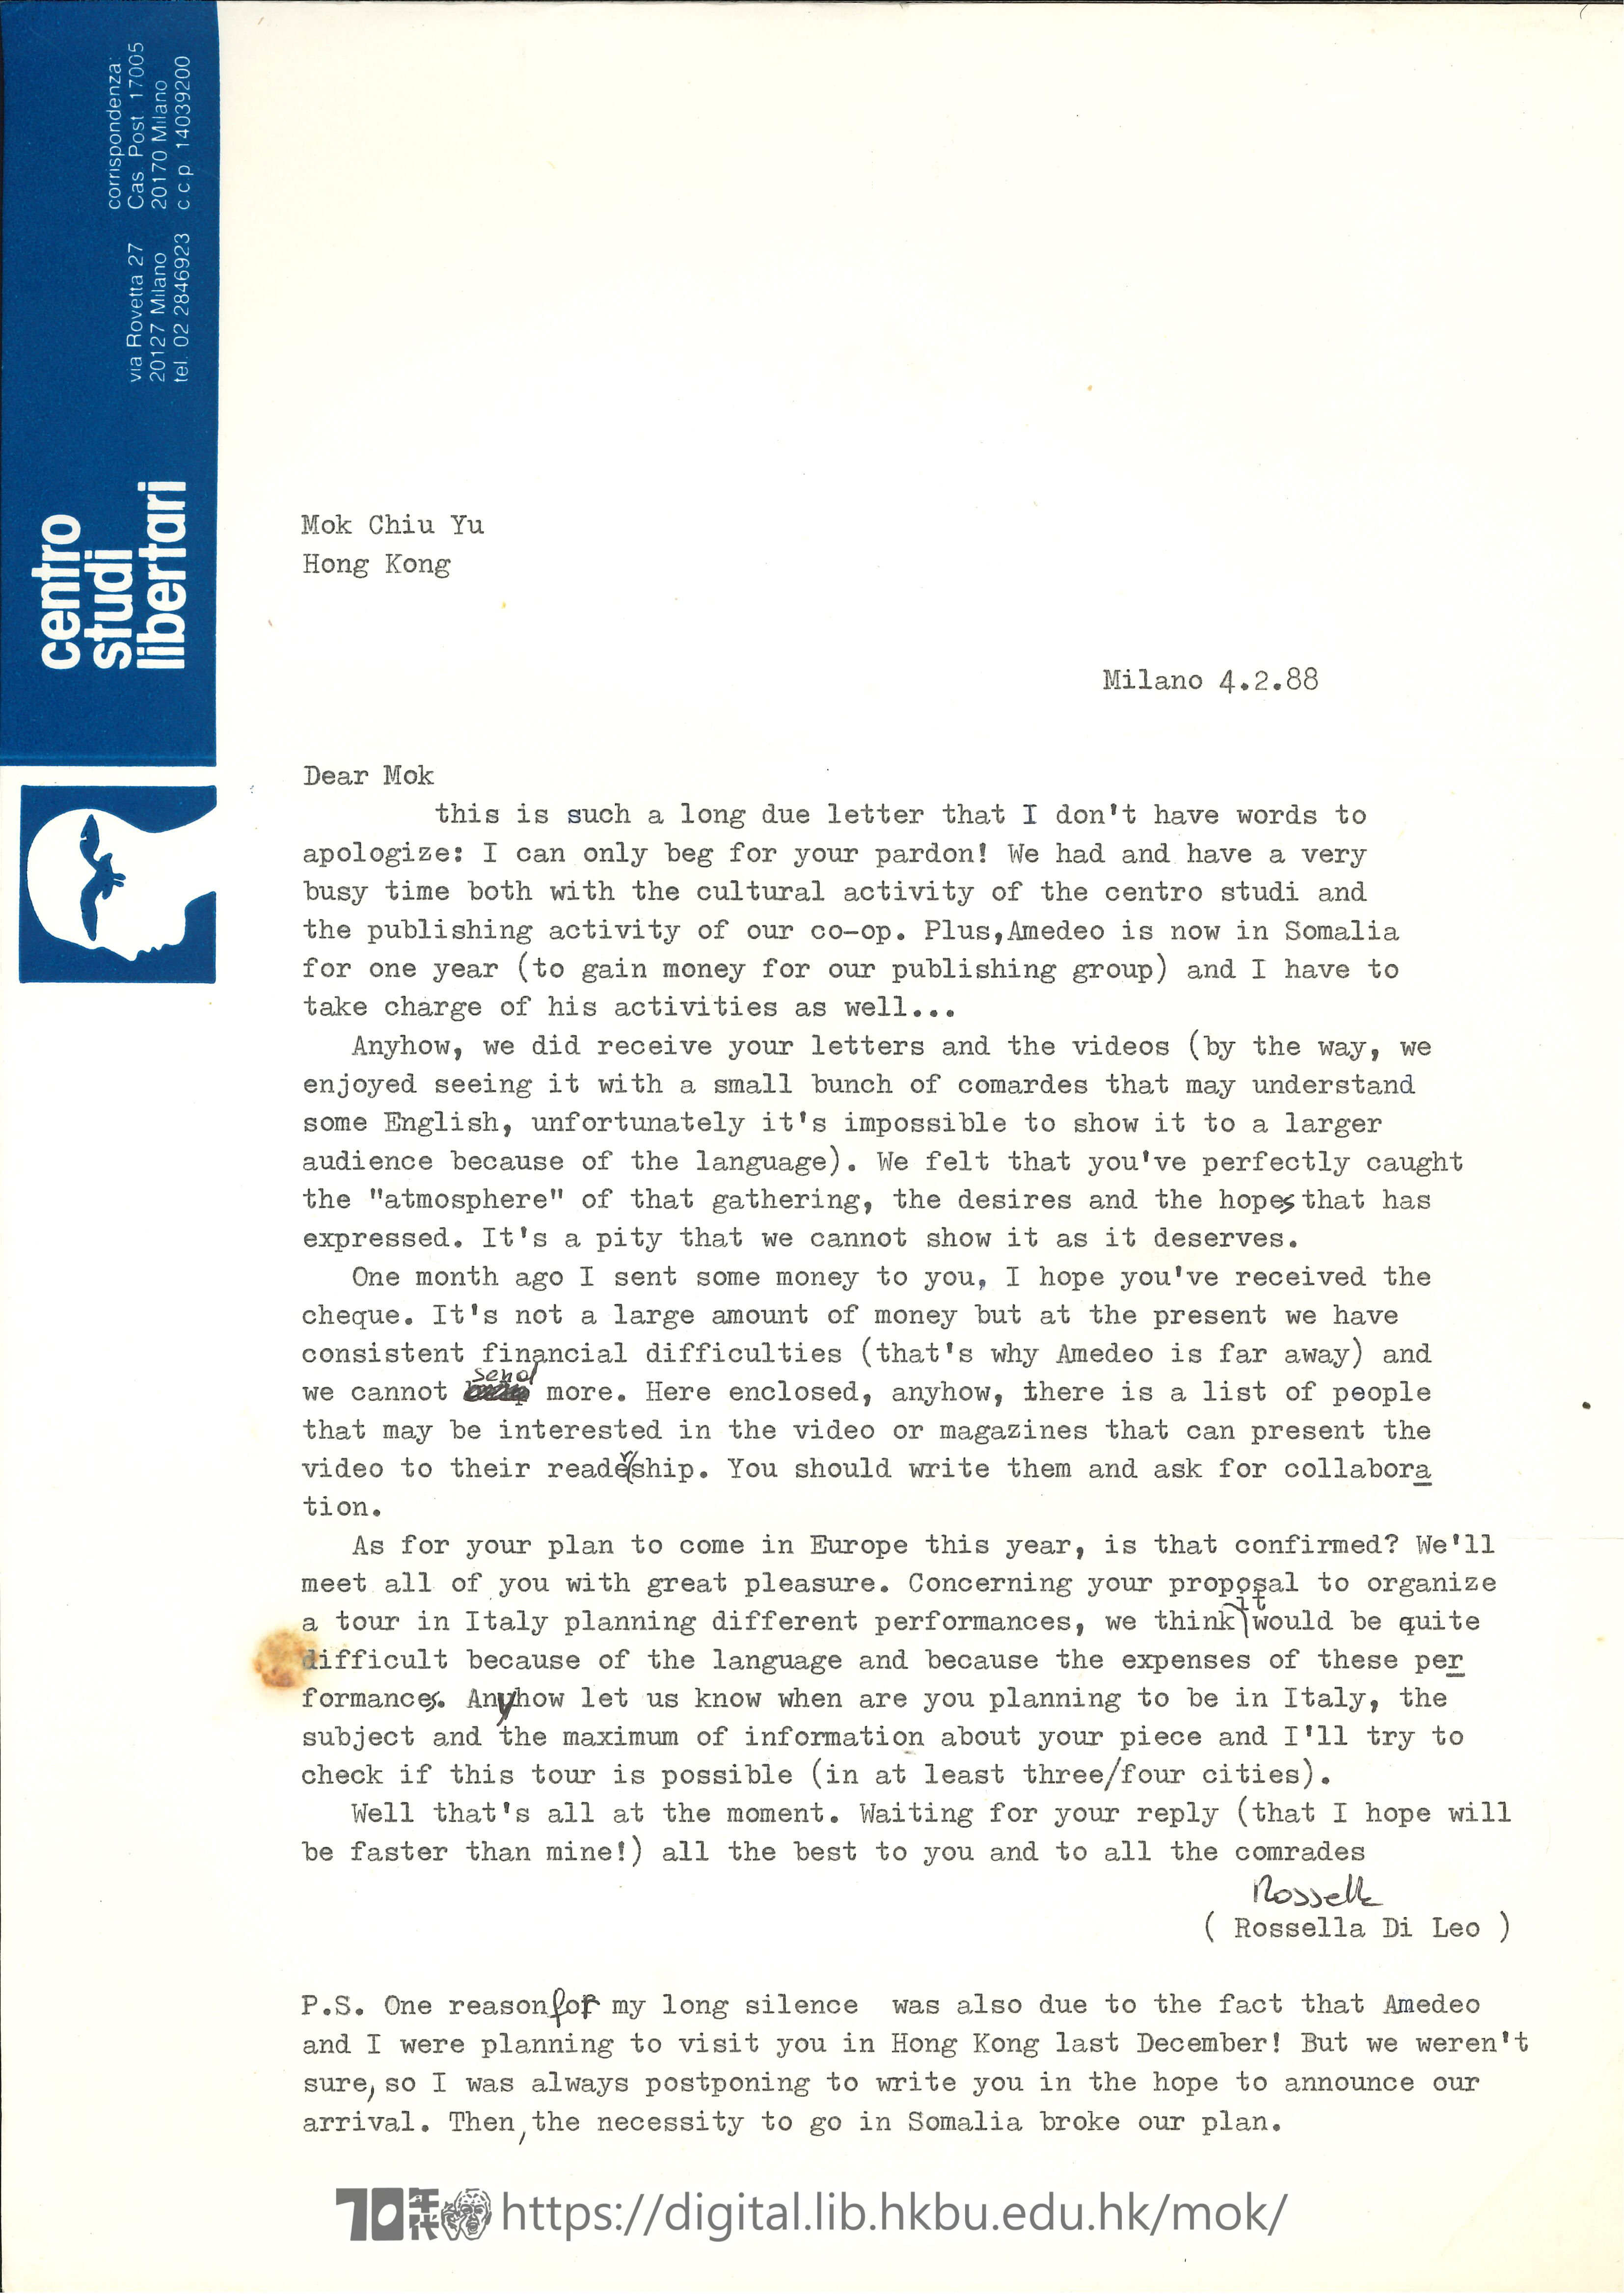   Letter from Rossella Di Leo to Mok Chiu Yu ROSSELLA, O.M. 